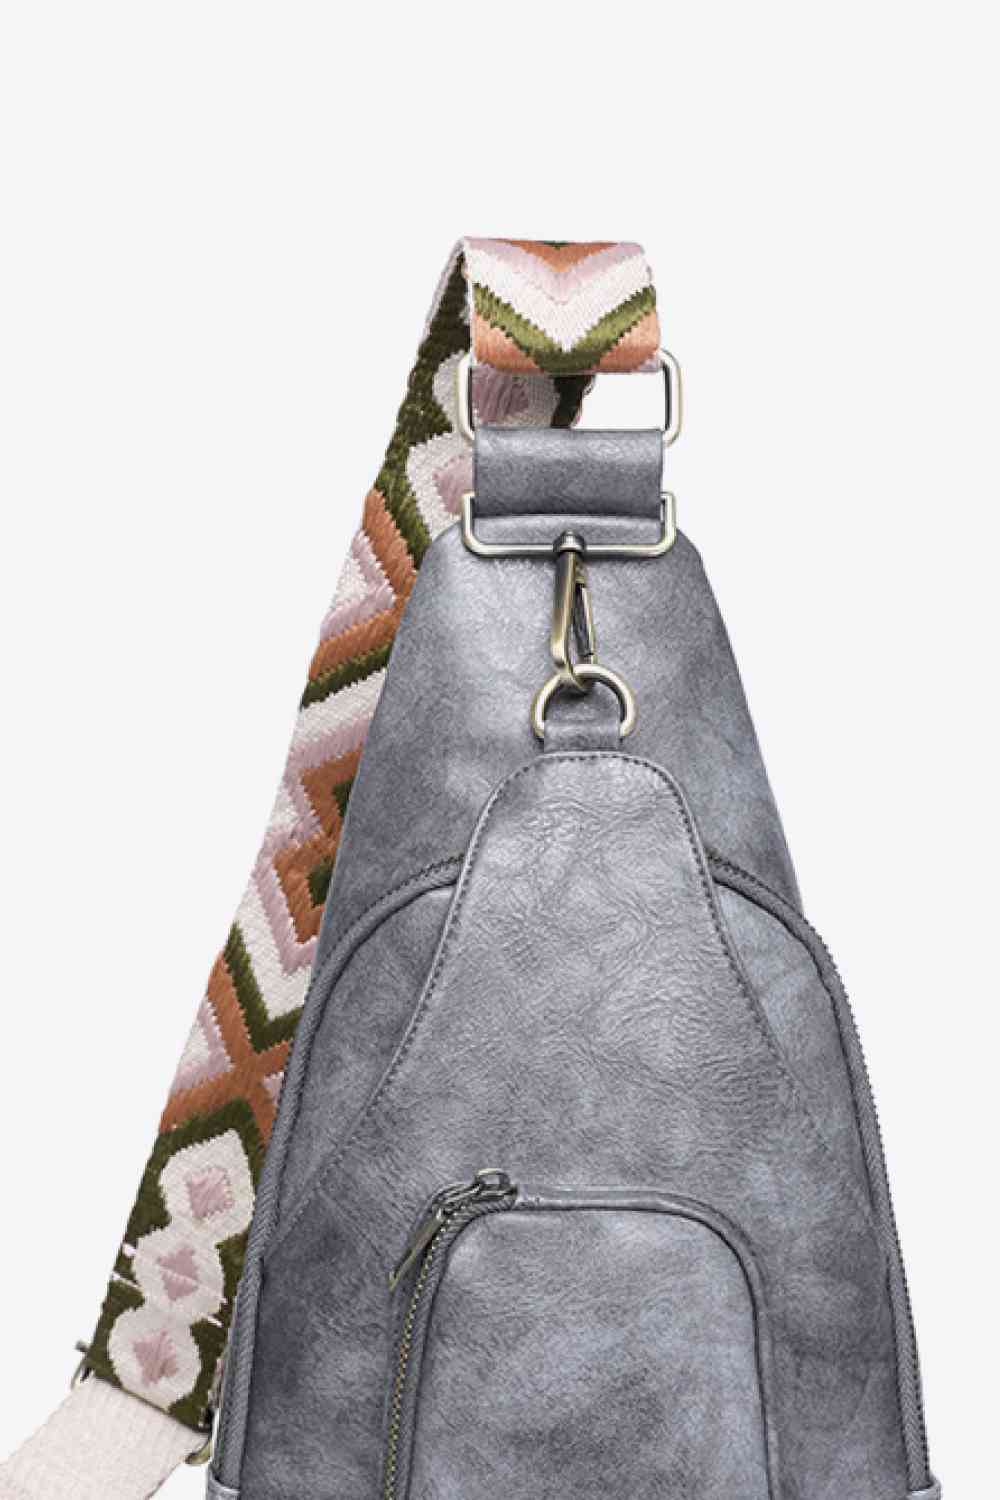 Adored Take A Trip PU Leather Sling Bag - BloomBliss.com